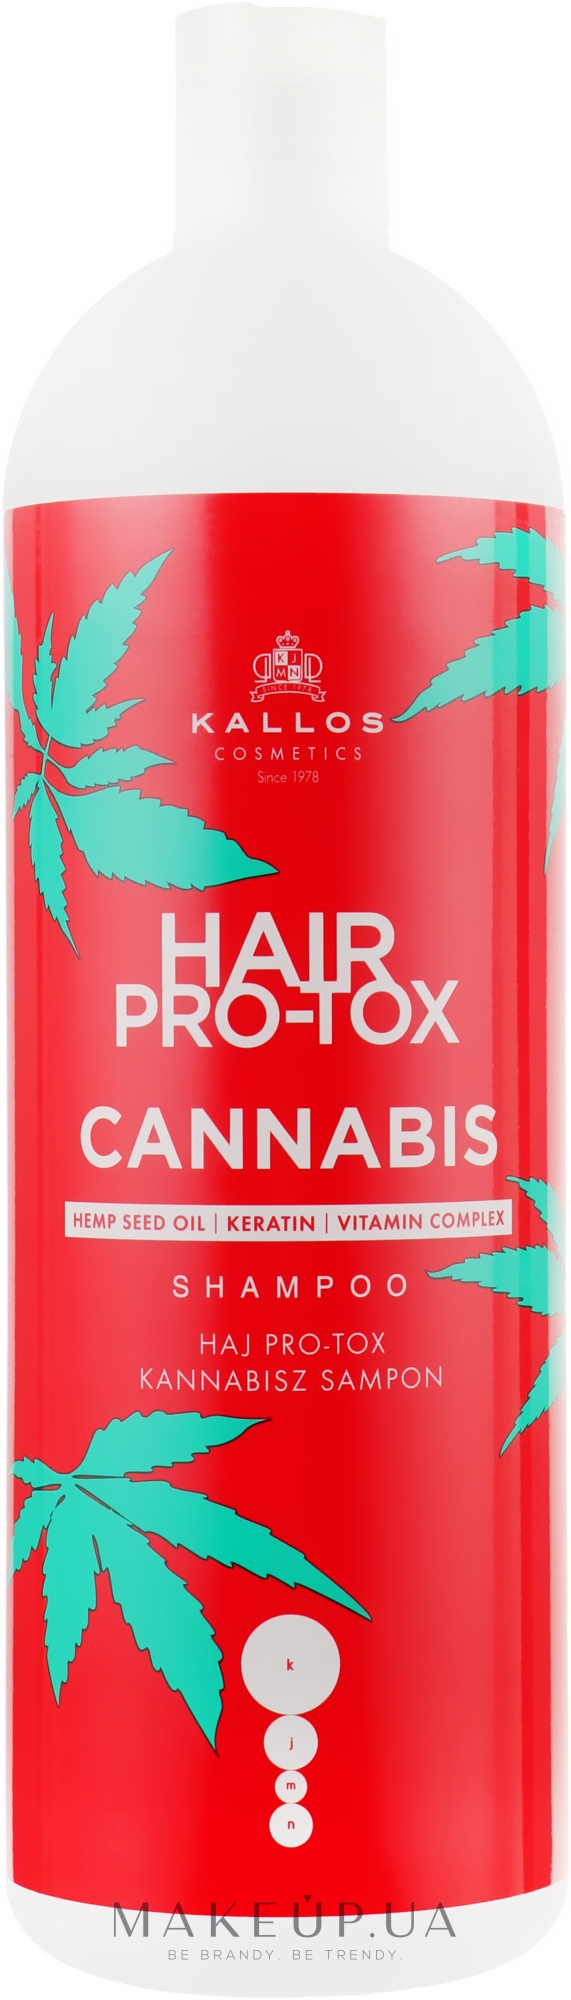 Шампунь для волос с маслом семян конопли - Kallos Pro-tox Cannabis Shampoo — фото 1000ml